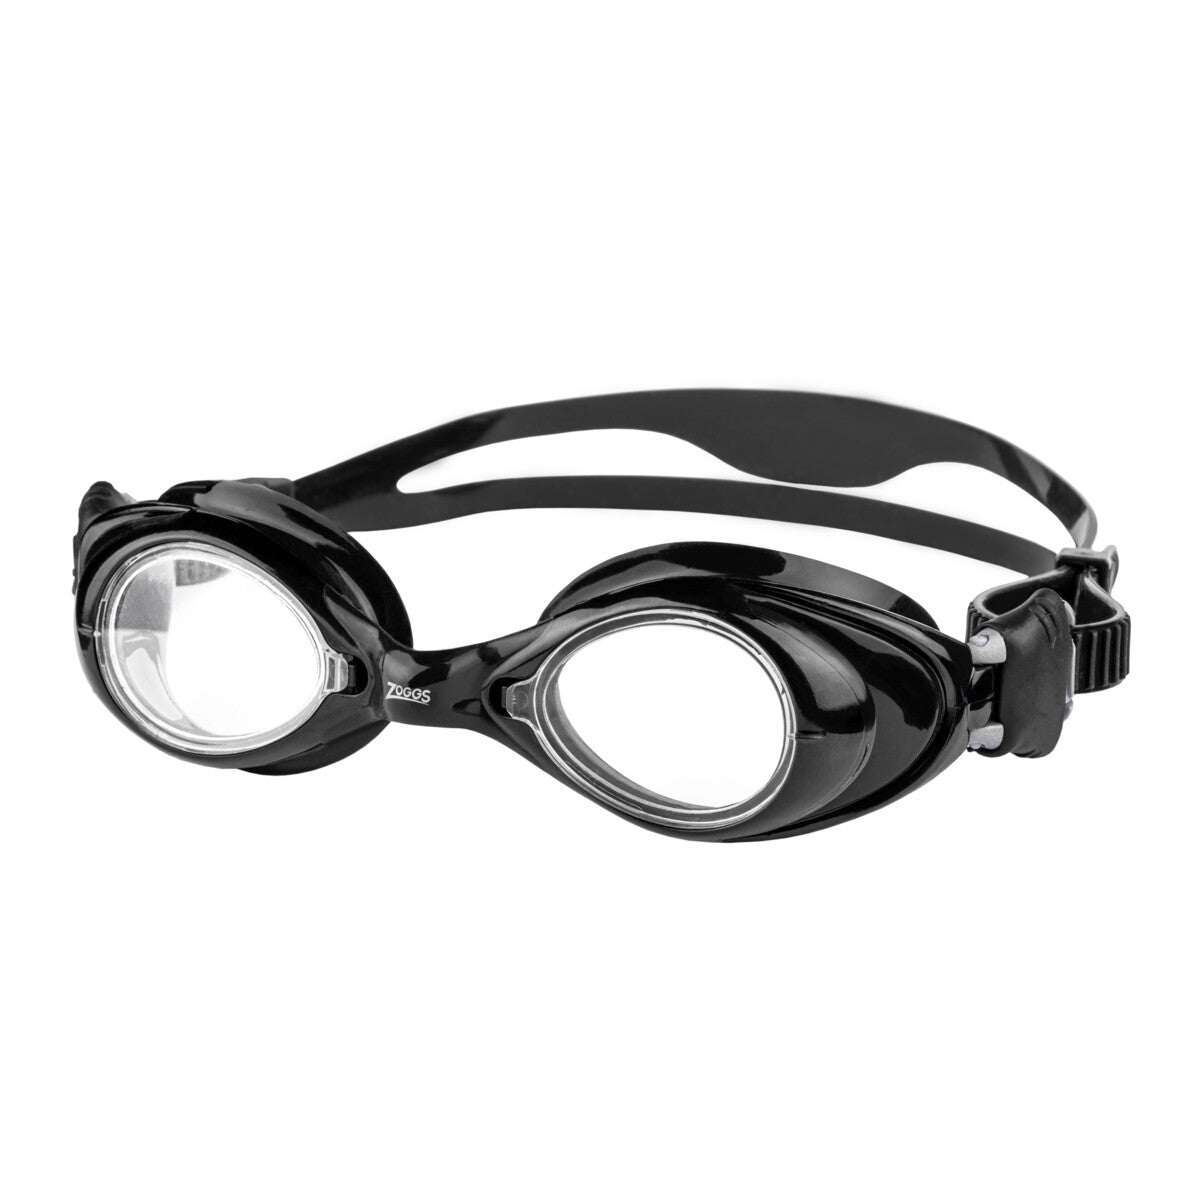 ZOGGS Vision Optical Corrective Goggle משקפת שחייה בצבע שחור עם עדשות אופטיות שקופה